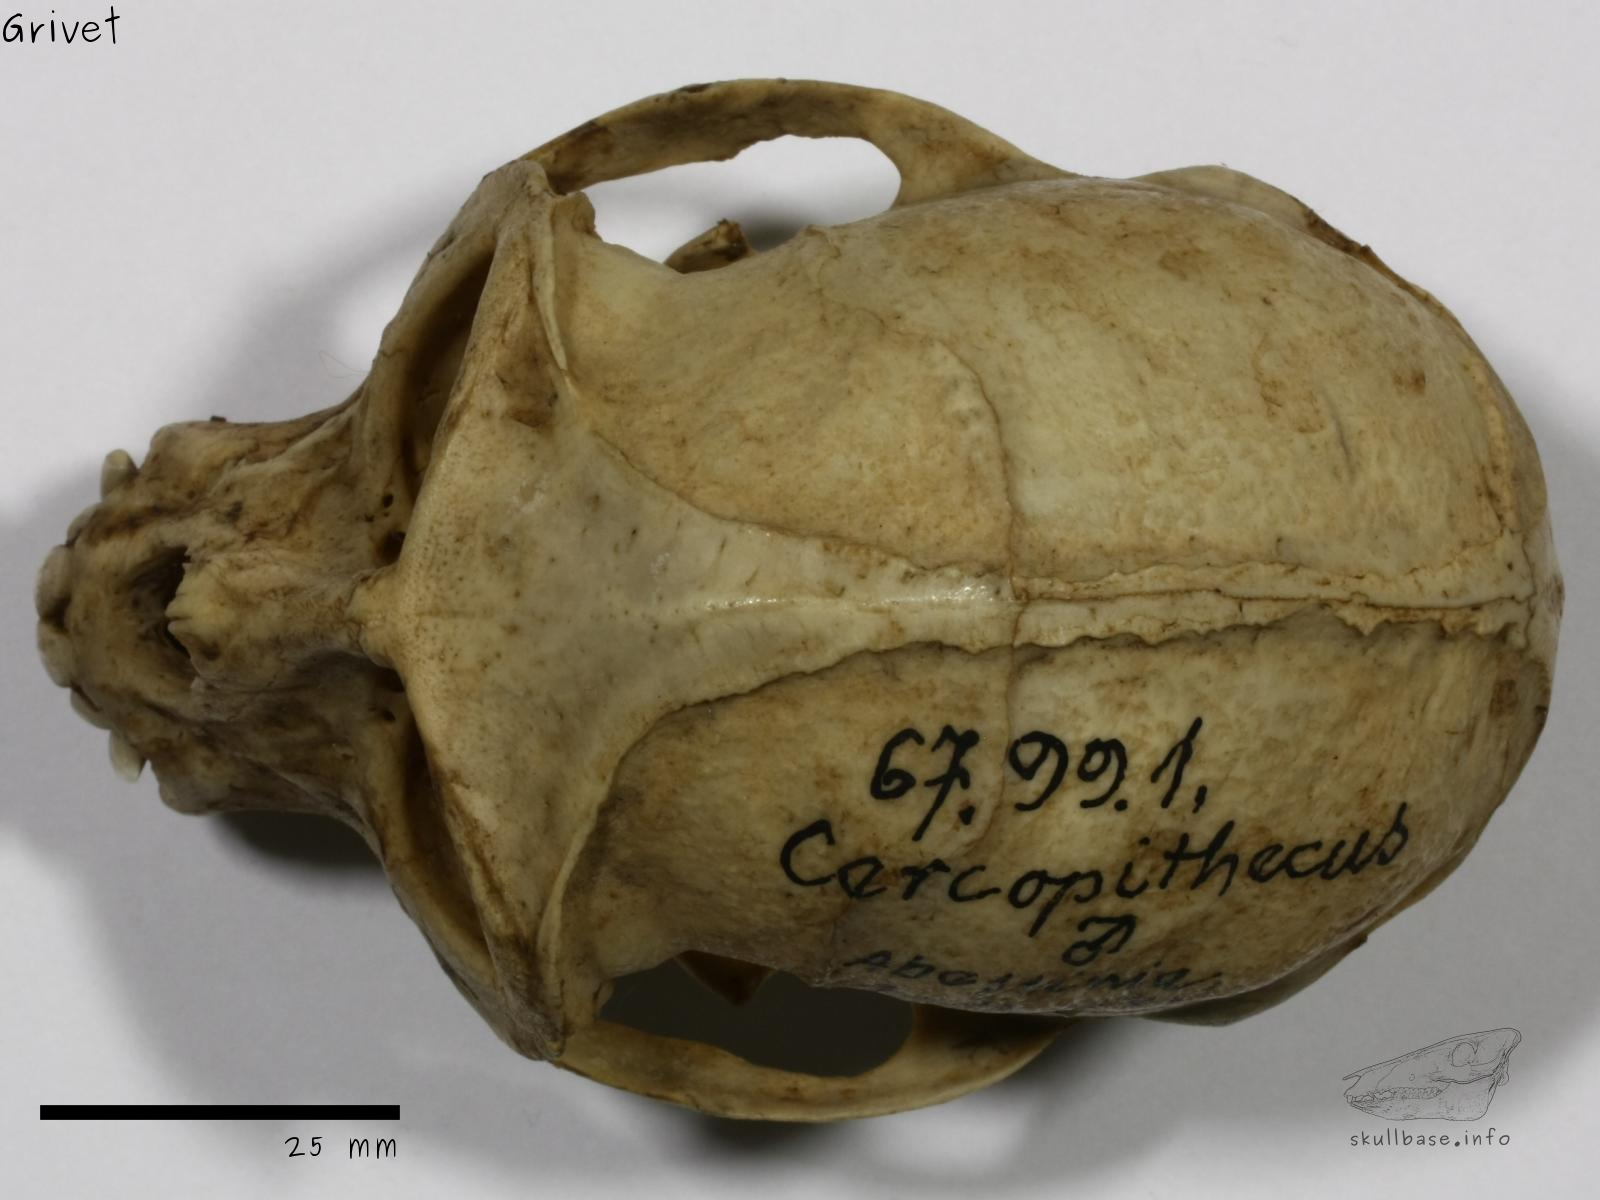 Grivet (Chlorocebus aethiops) skull dorsal view